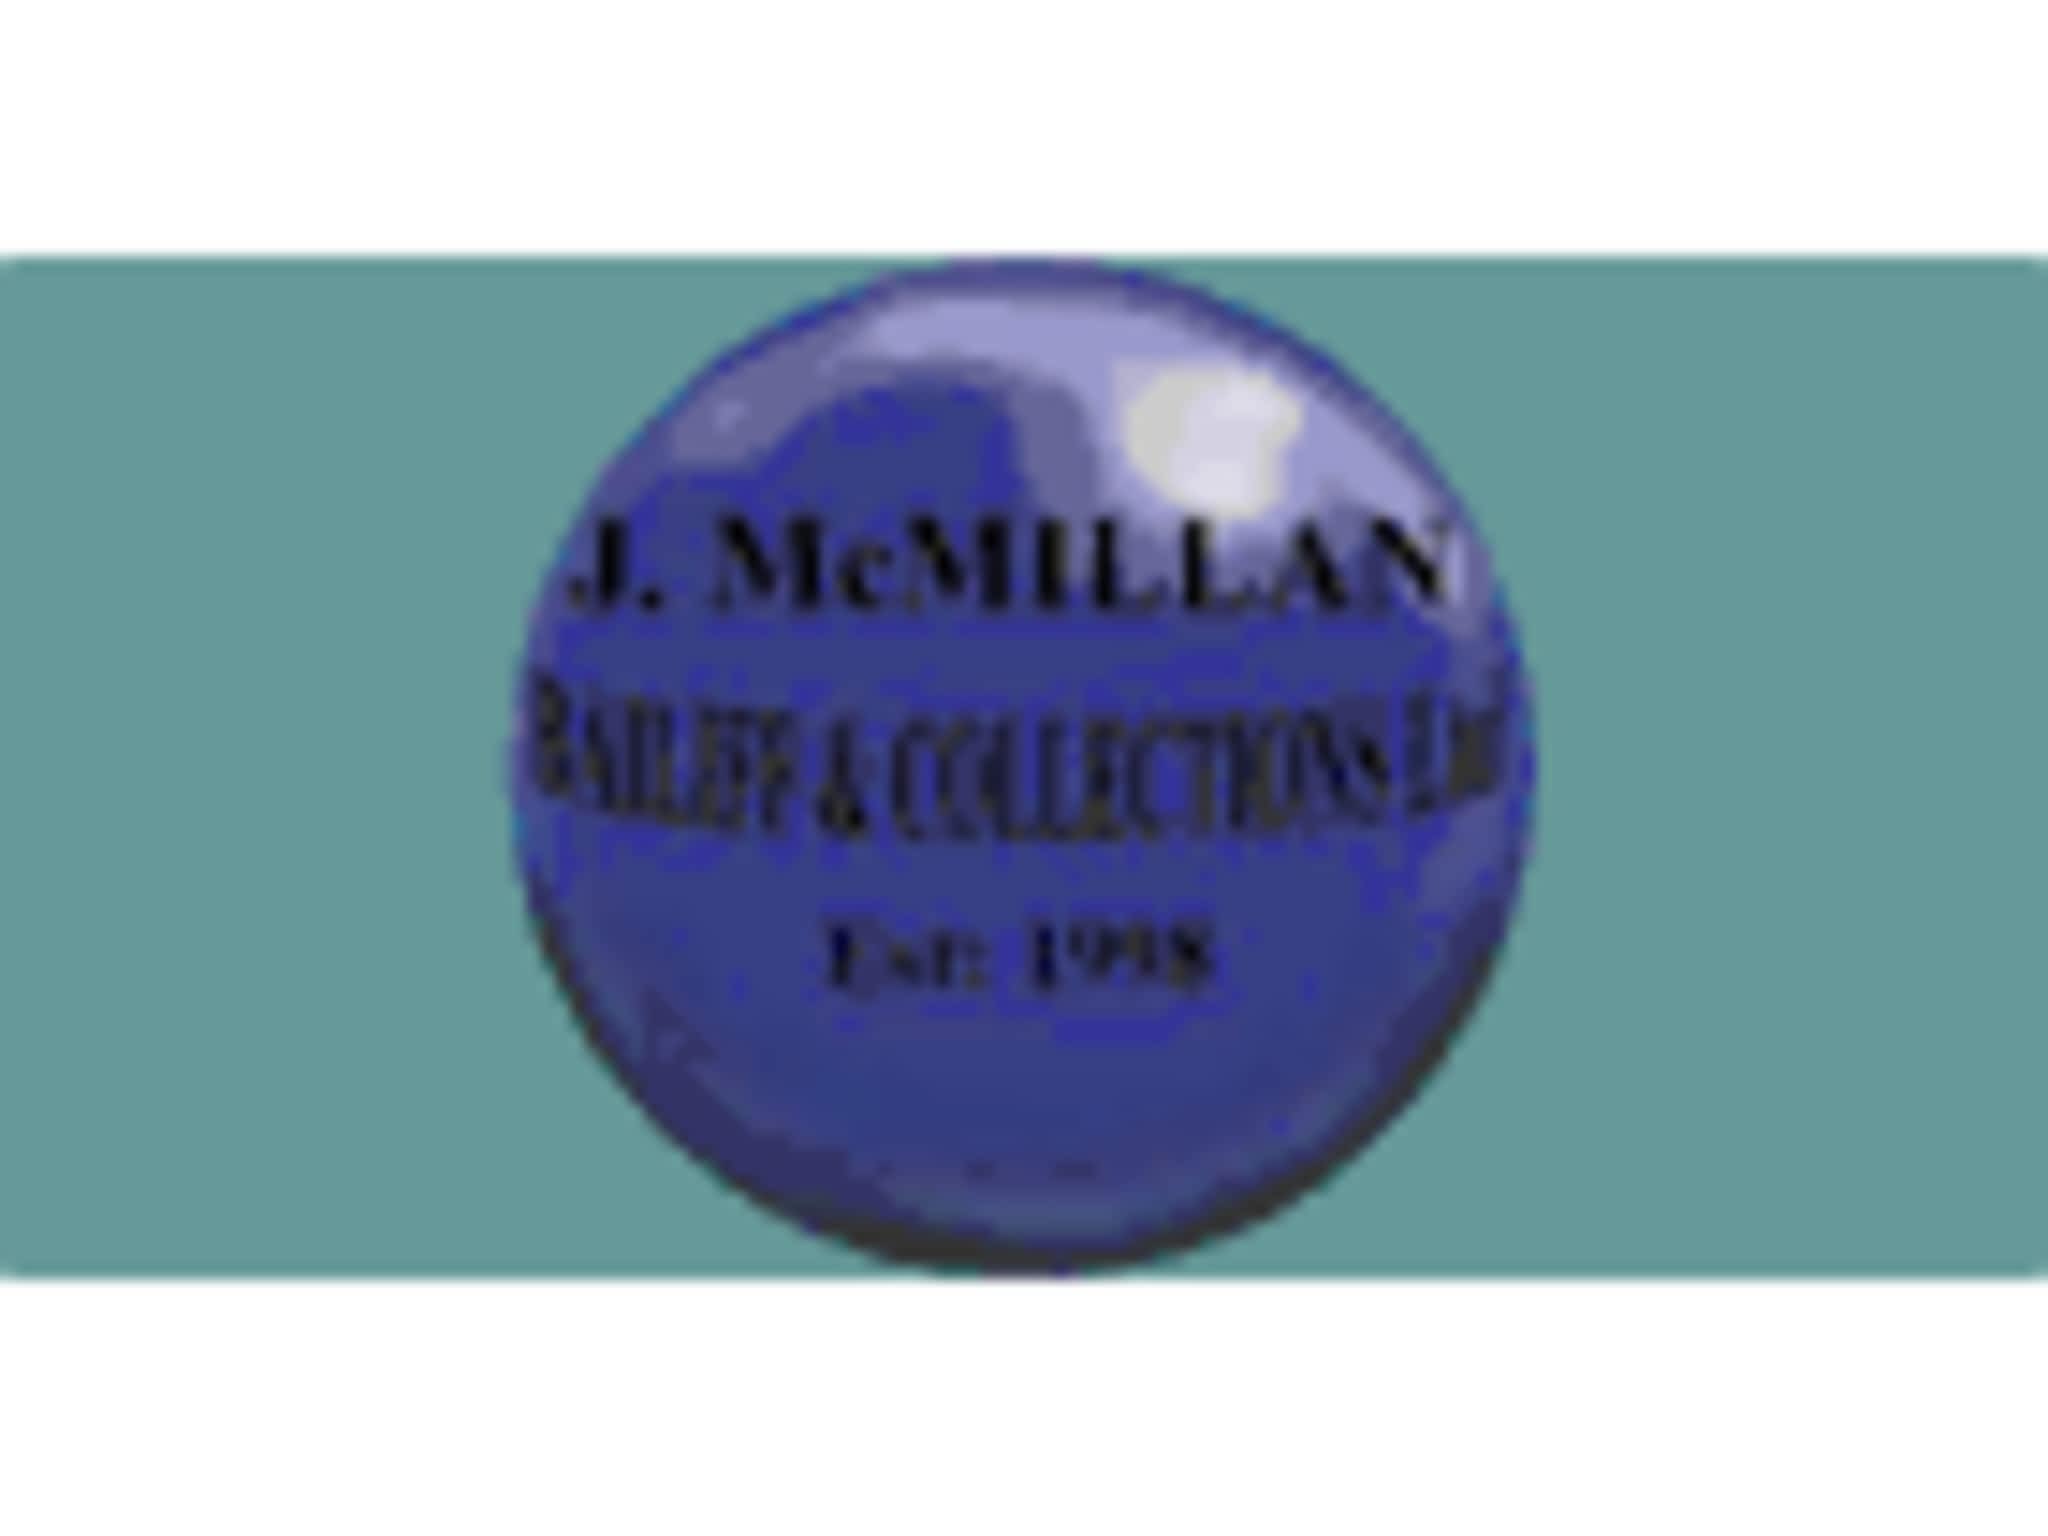 photo J McMillan Bailiff & Collection Ltd